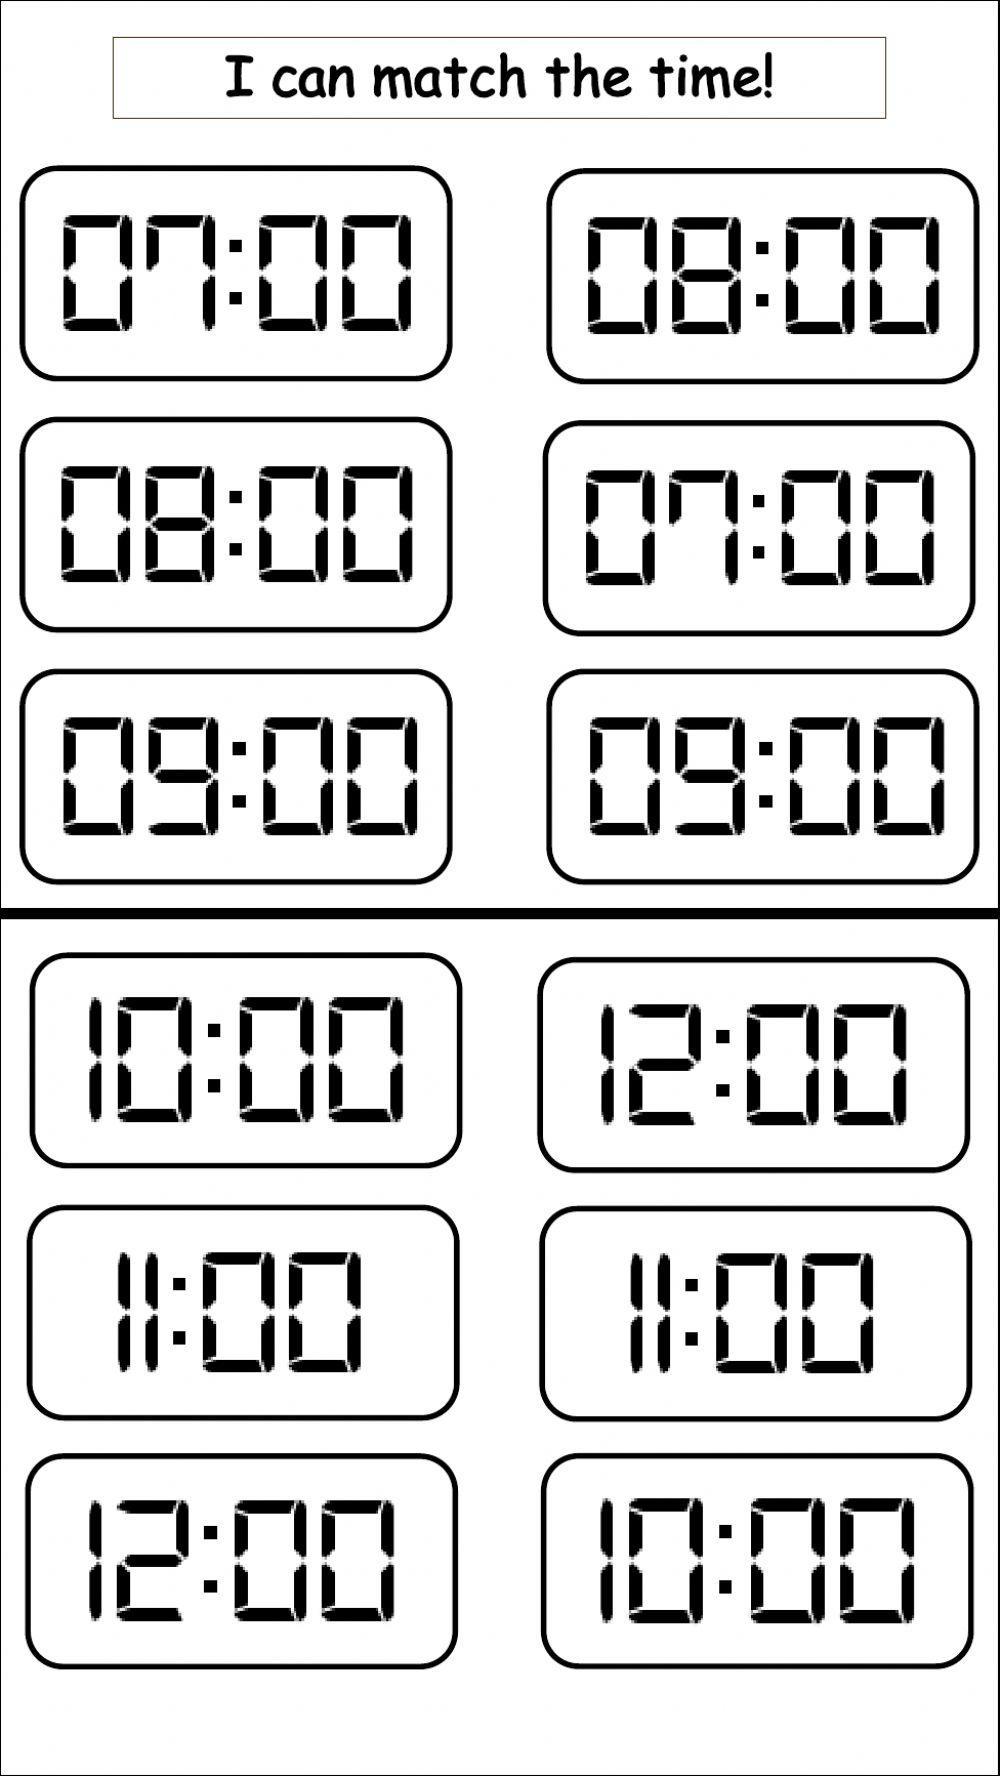 Matching Digital Clocks 2 BW